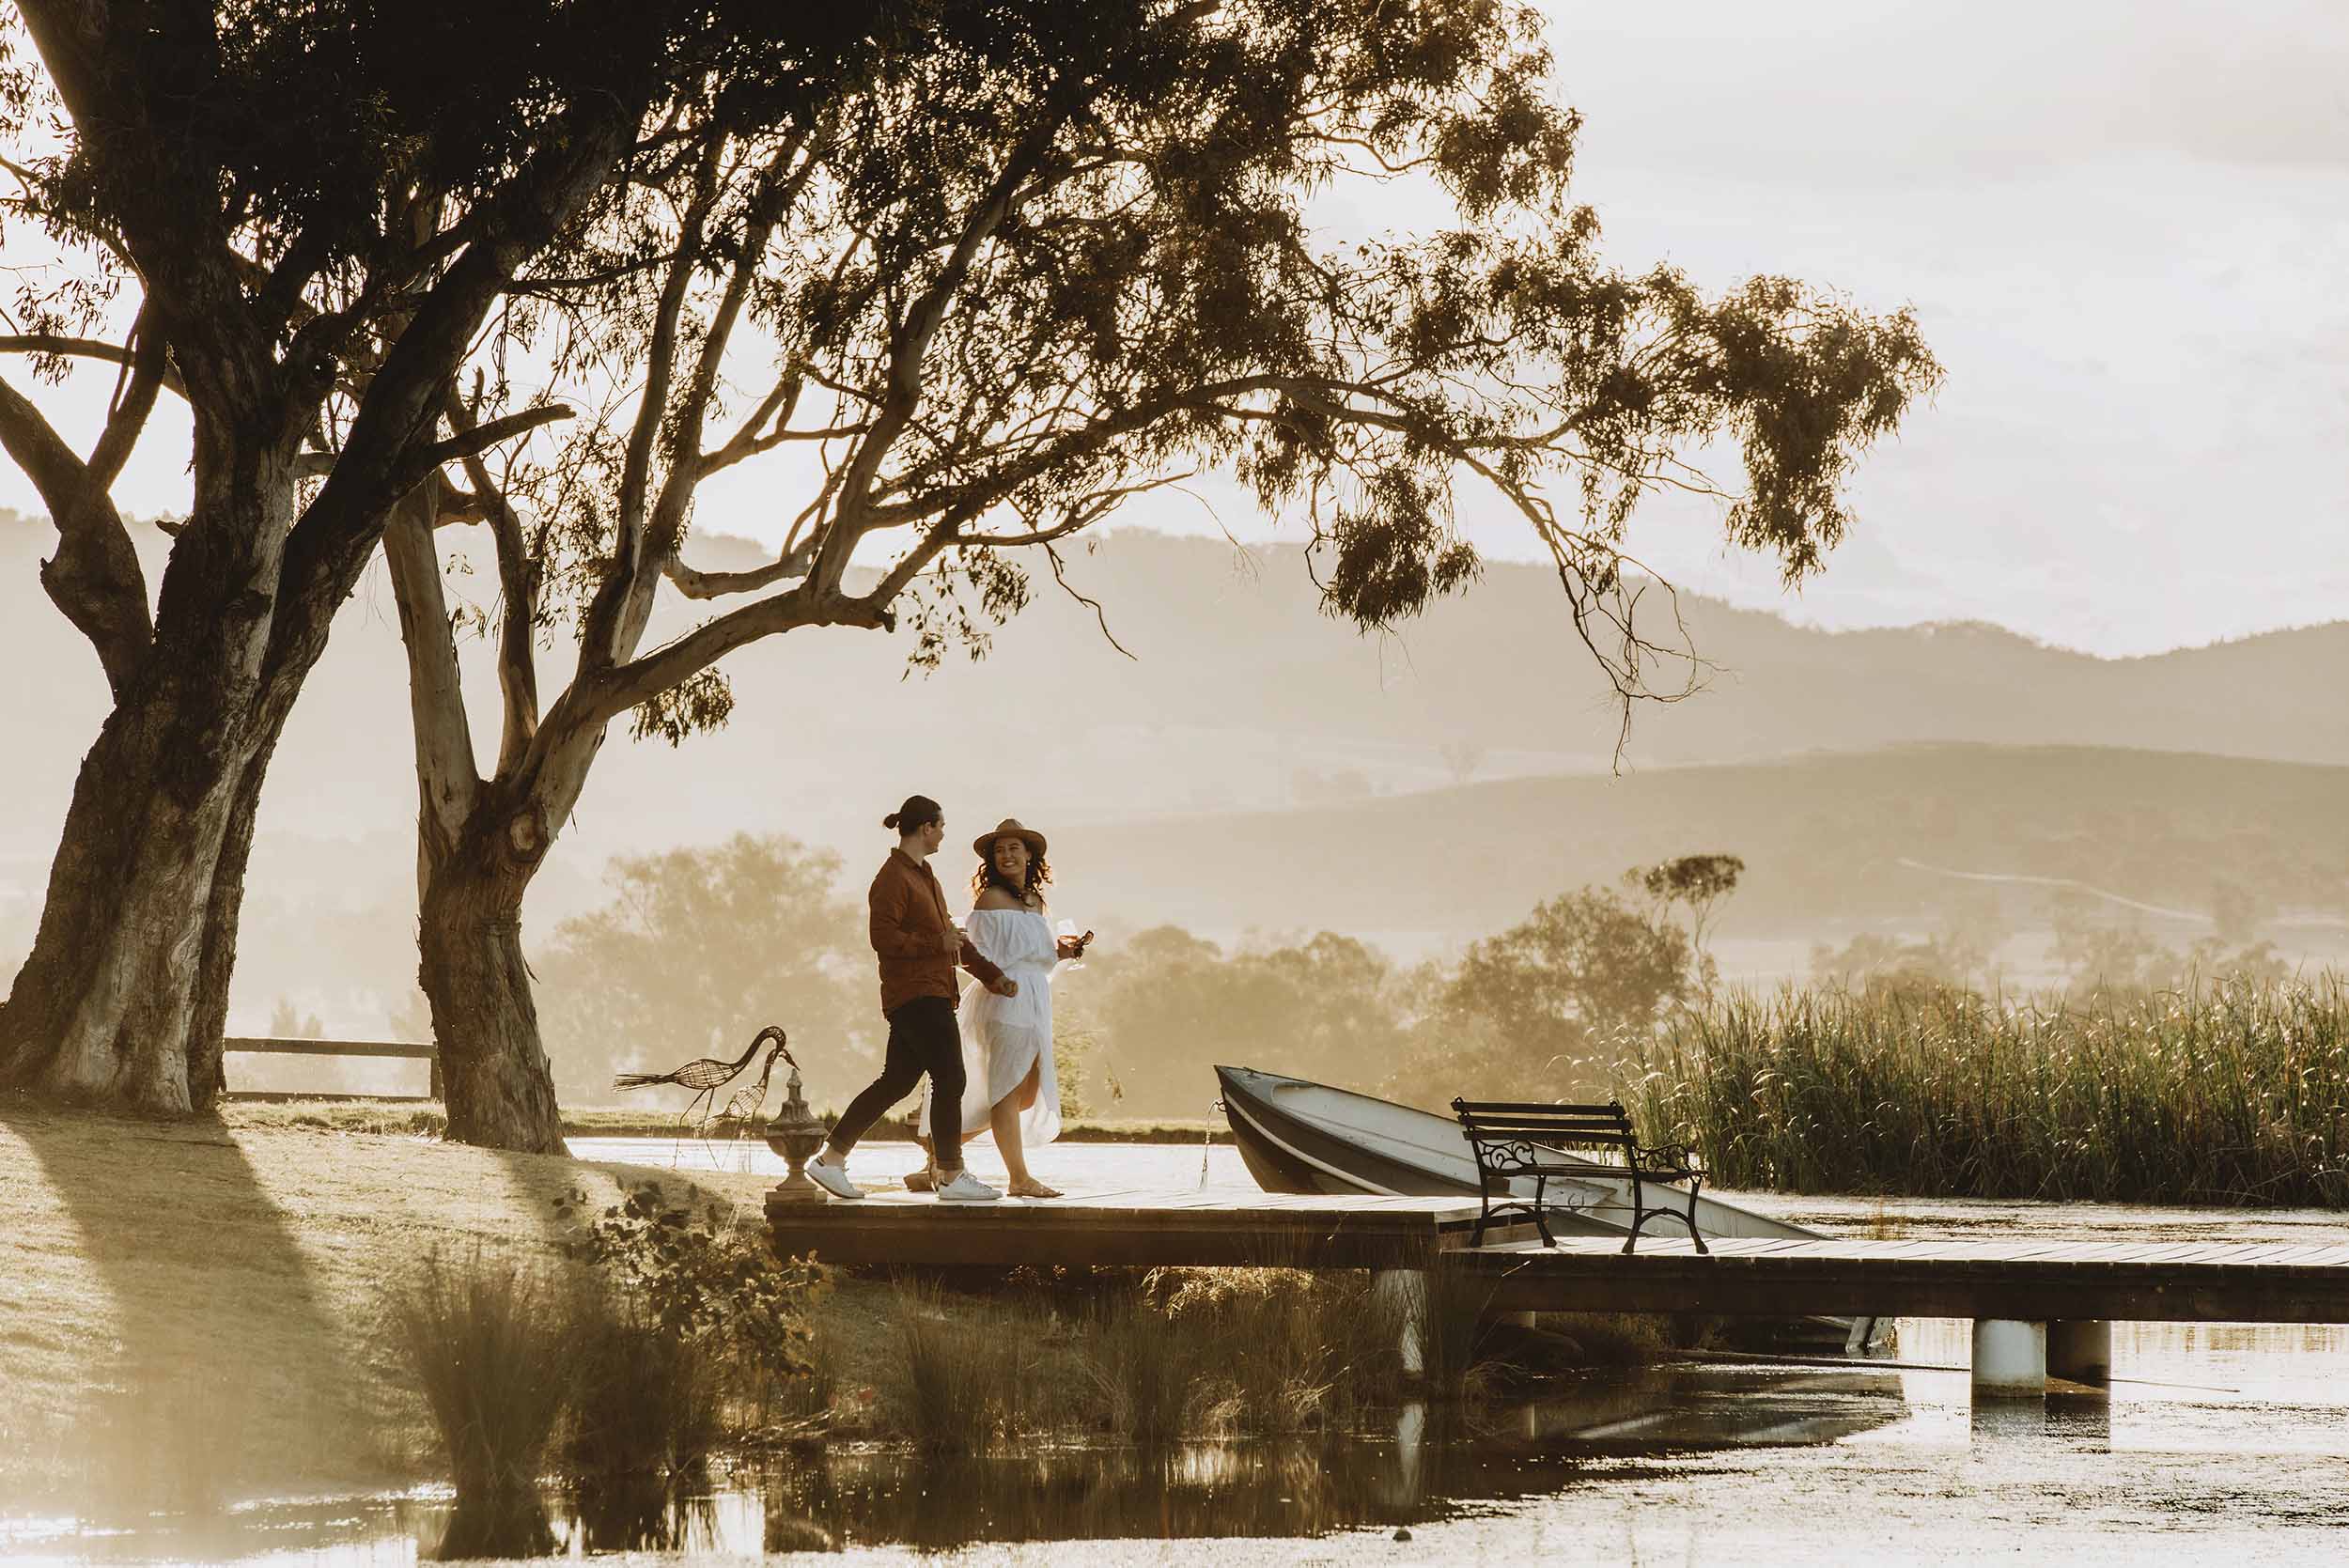 evamor valley romantic engagement accommodation getaway mudgee nsw australia